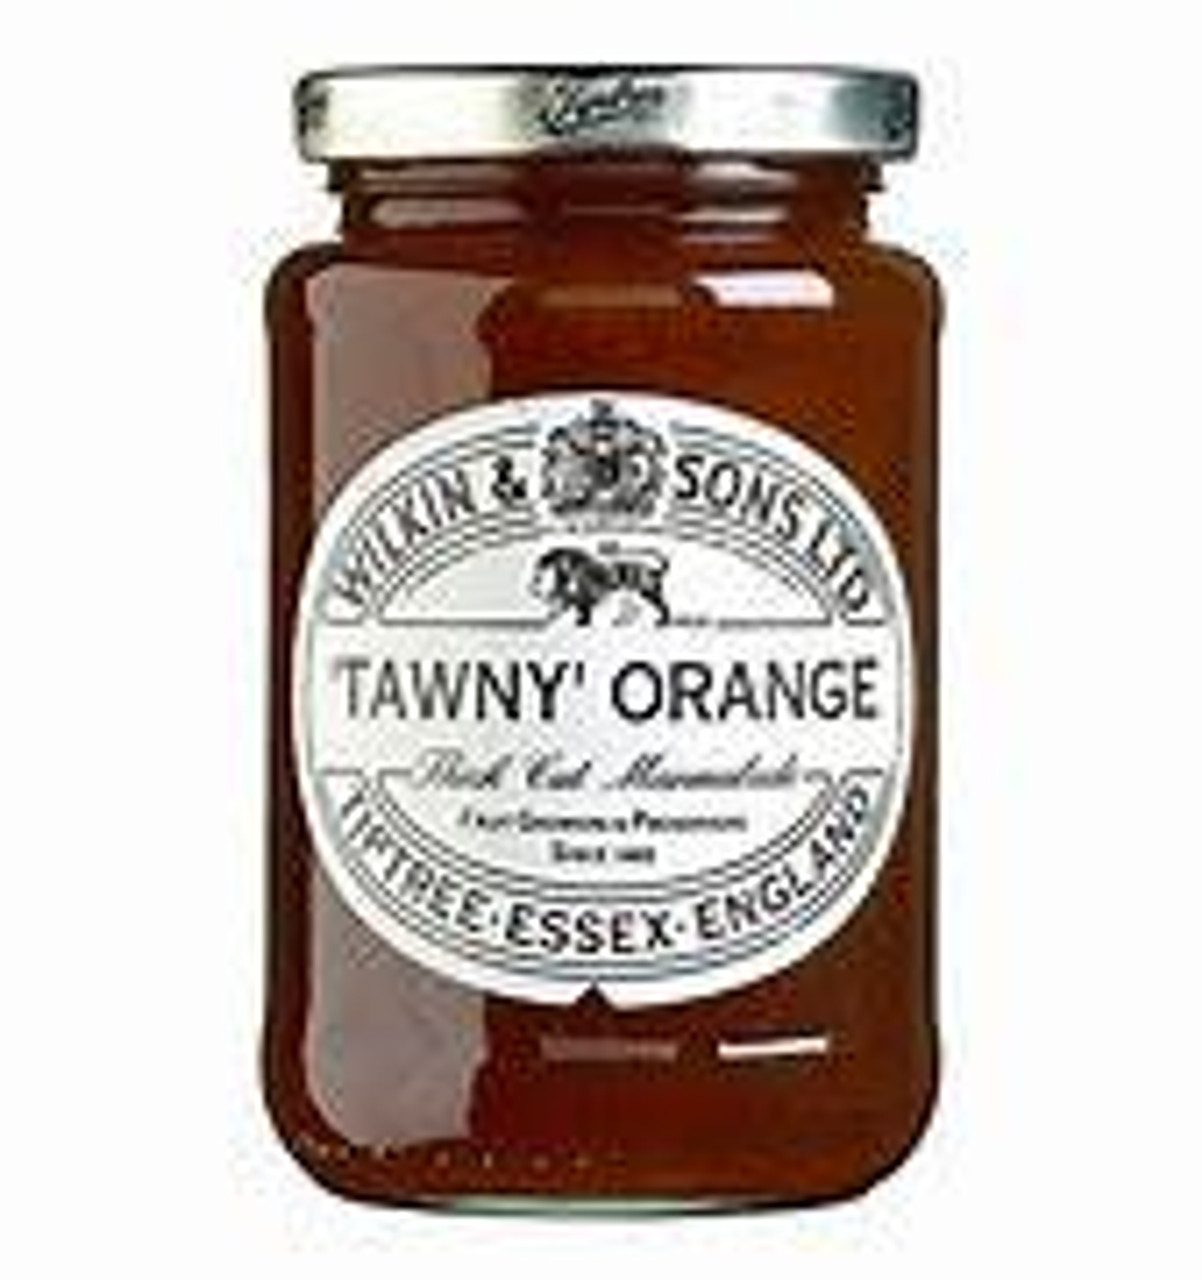 Tiptree - Tawny Orange Marmalade, 12oz